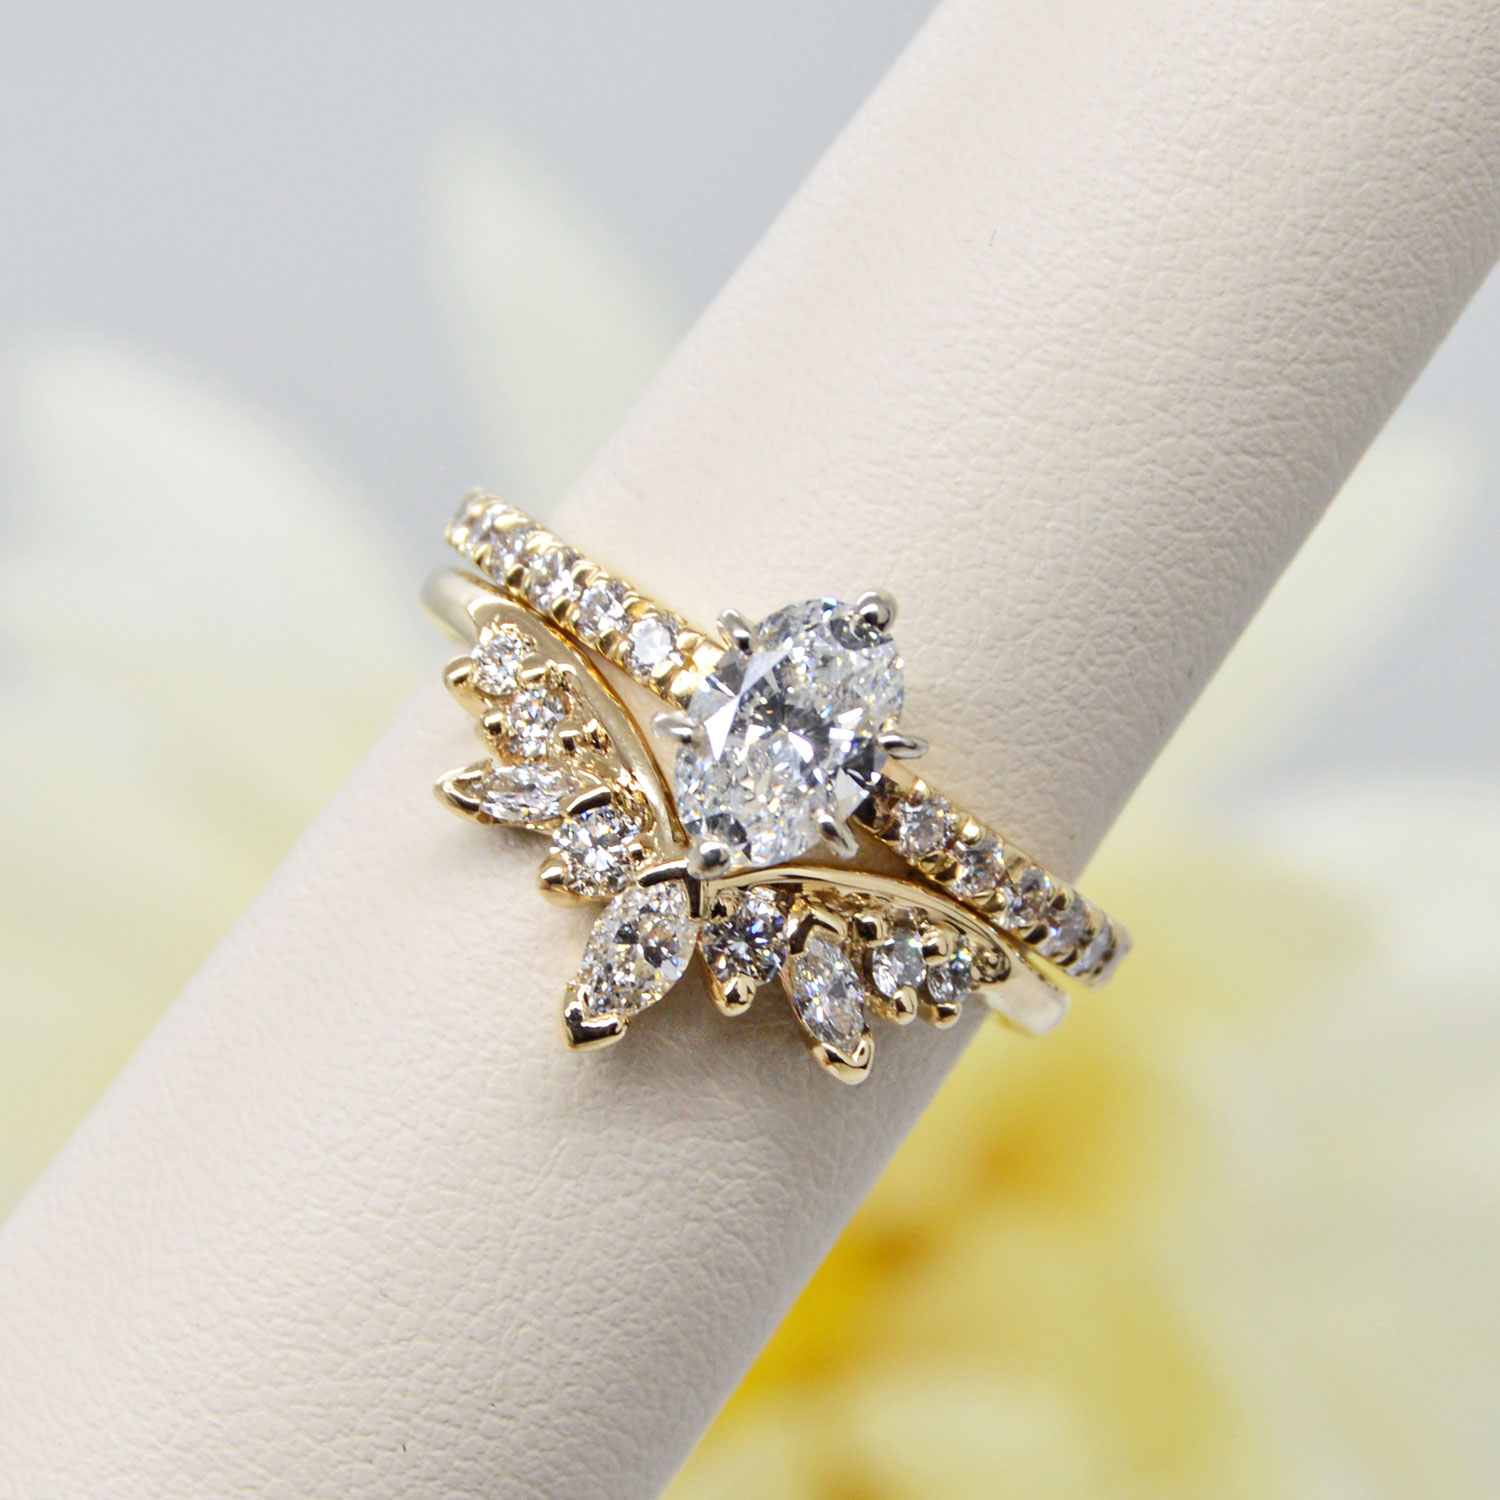 14k White Gold Heart Shaped Engagement Ring